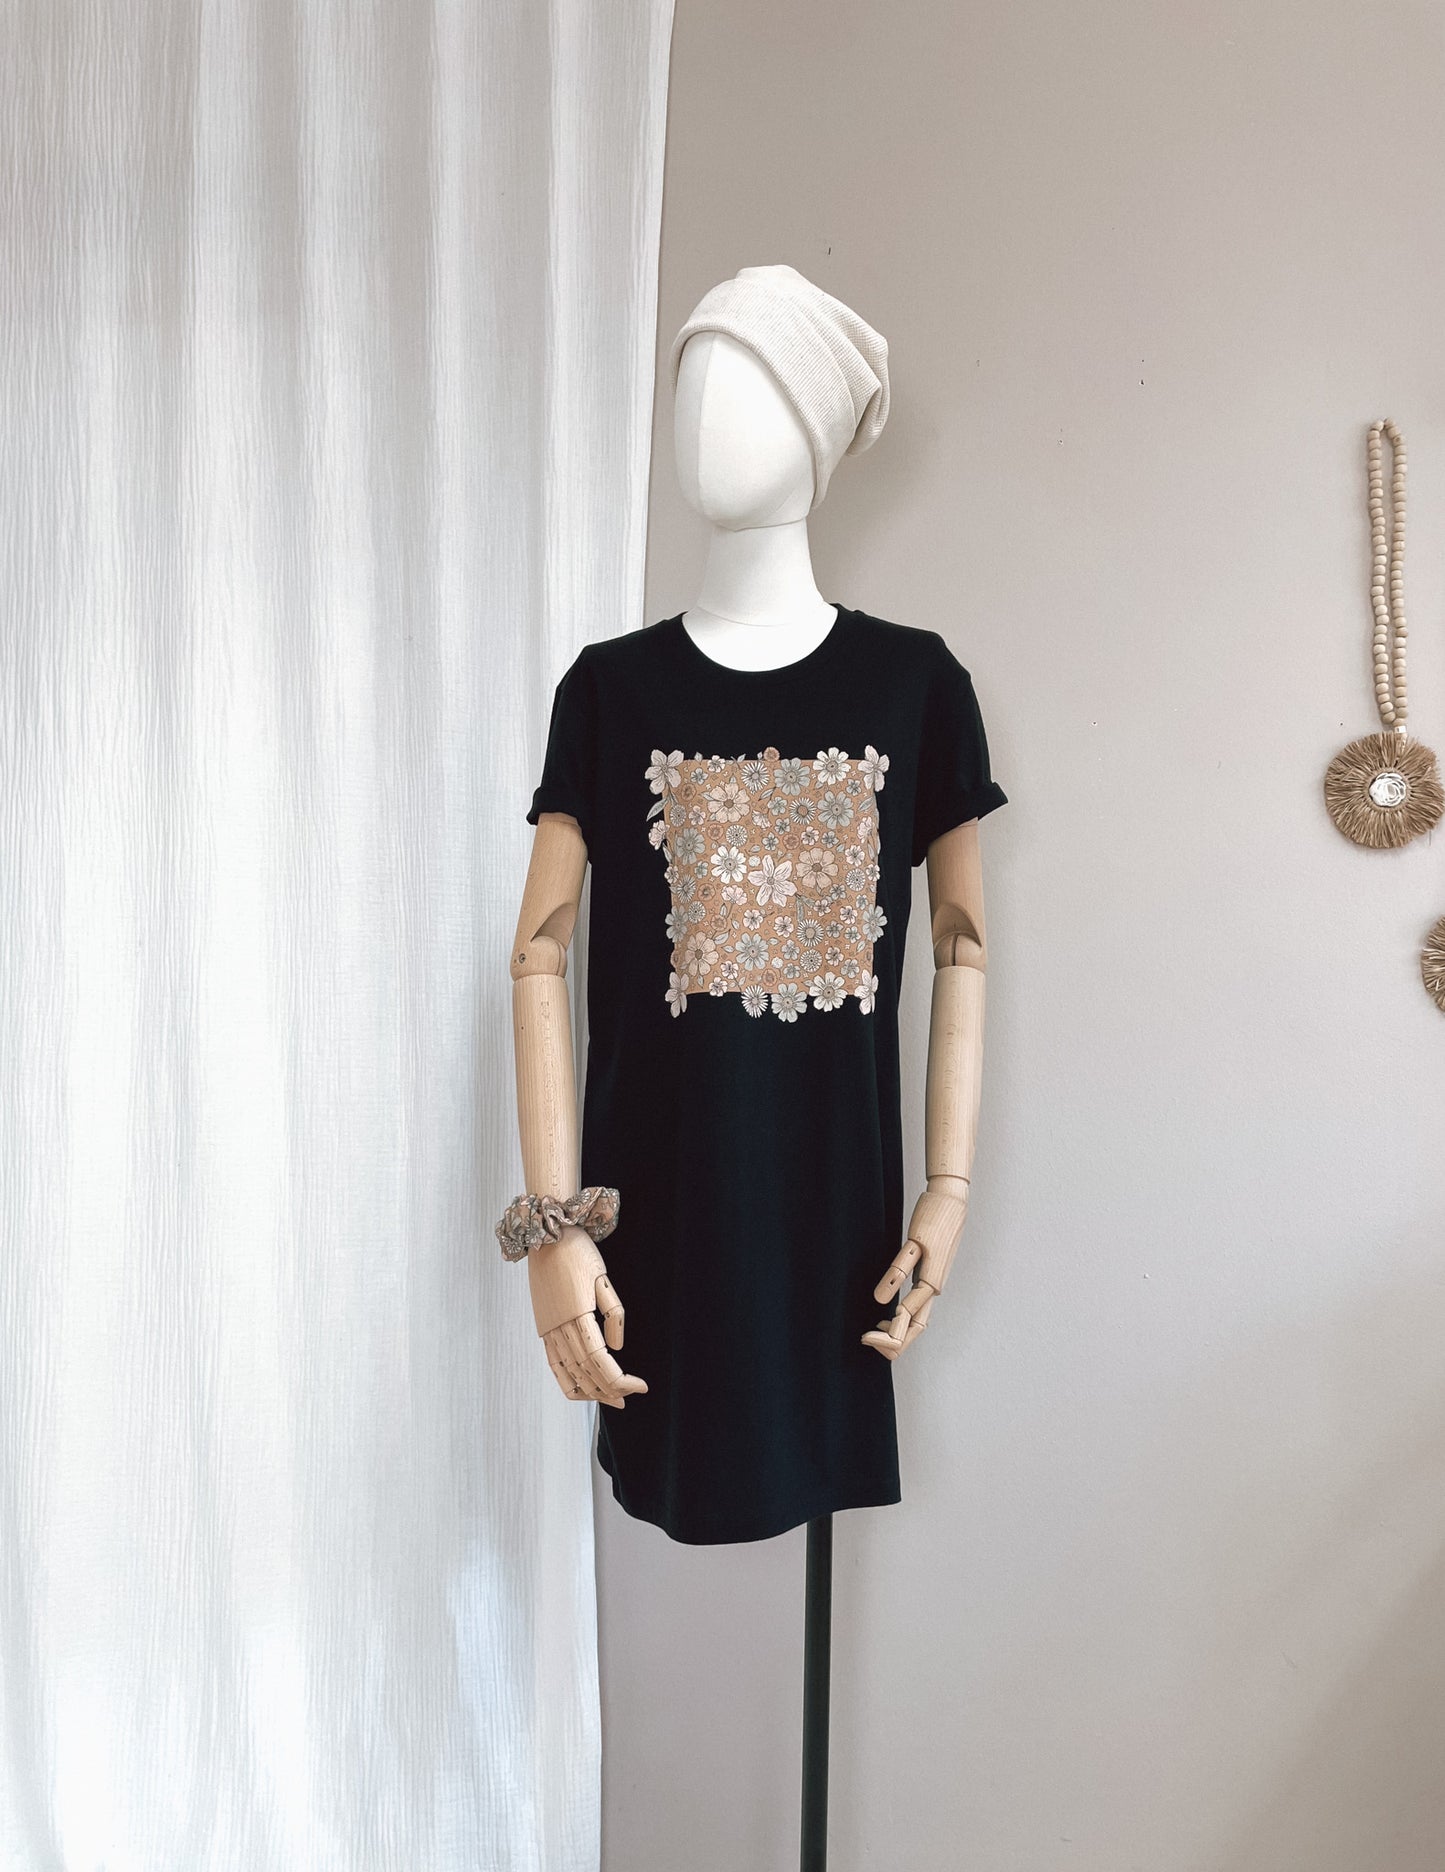 T-shirt dress / Caramel bold floral / black